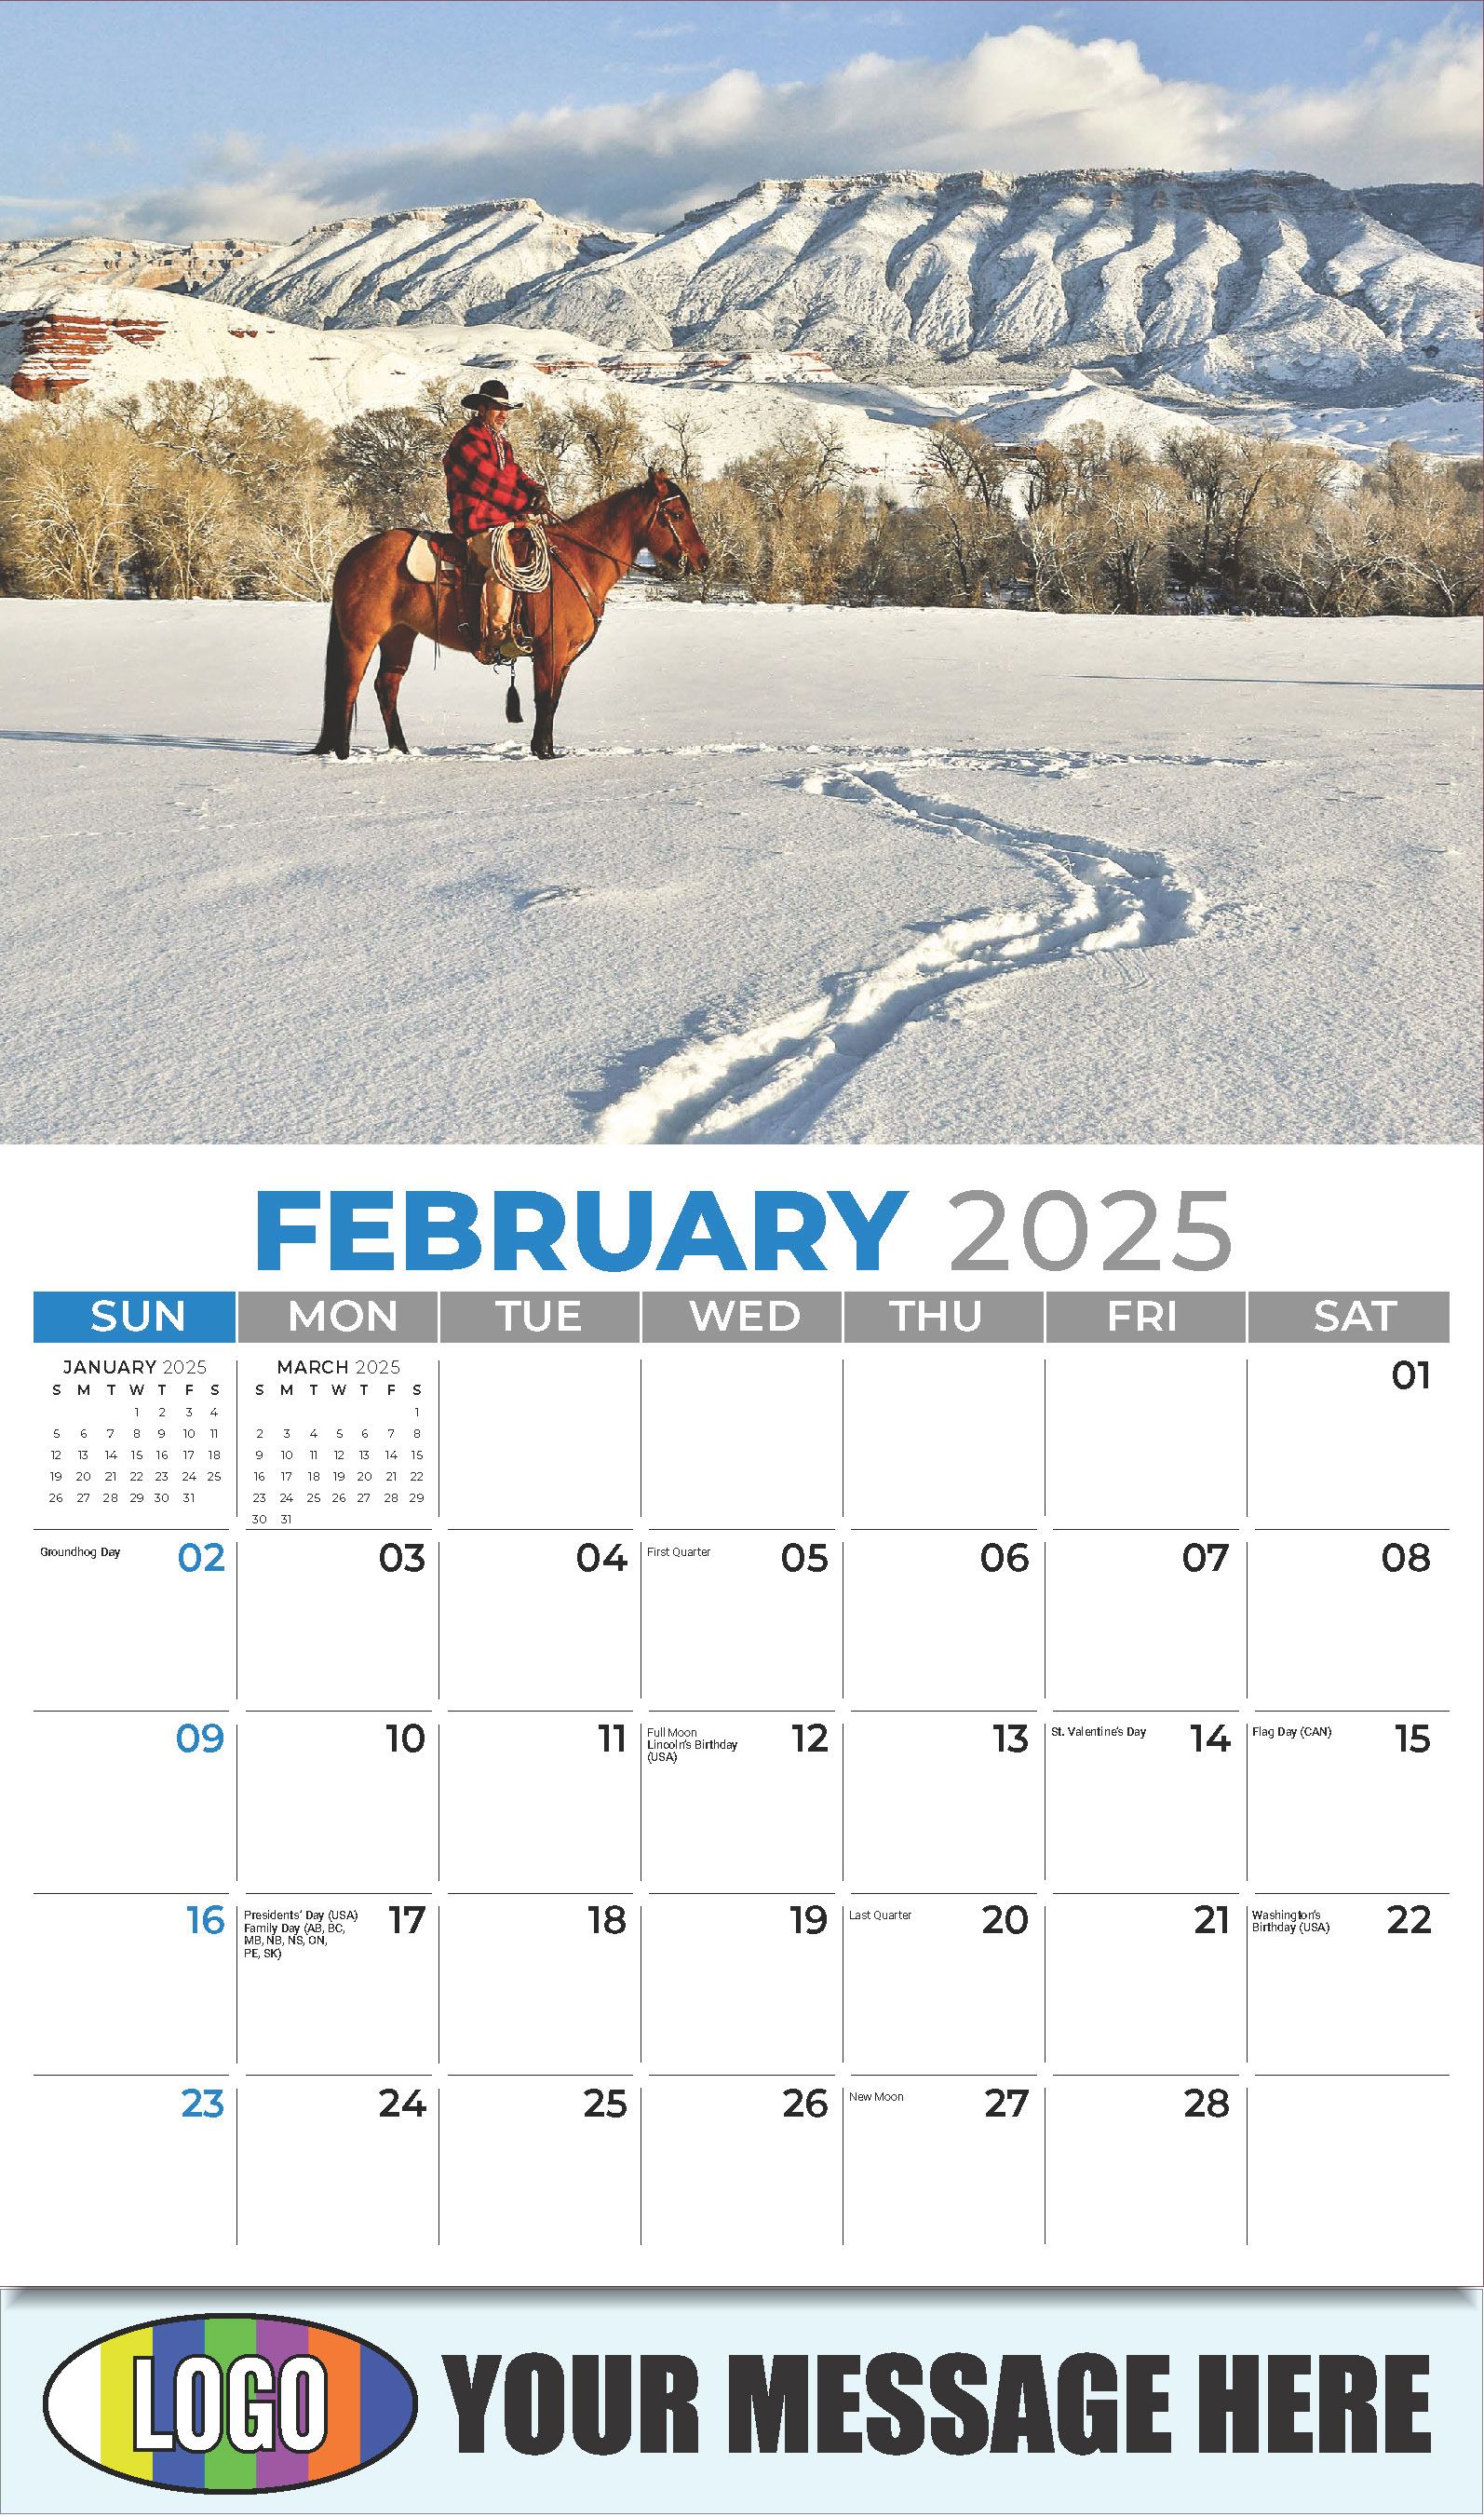 Country Spirit 2025 Business Advertising Calendar - February